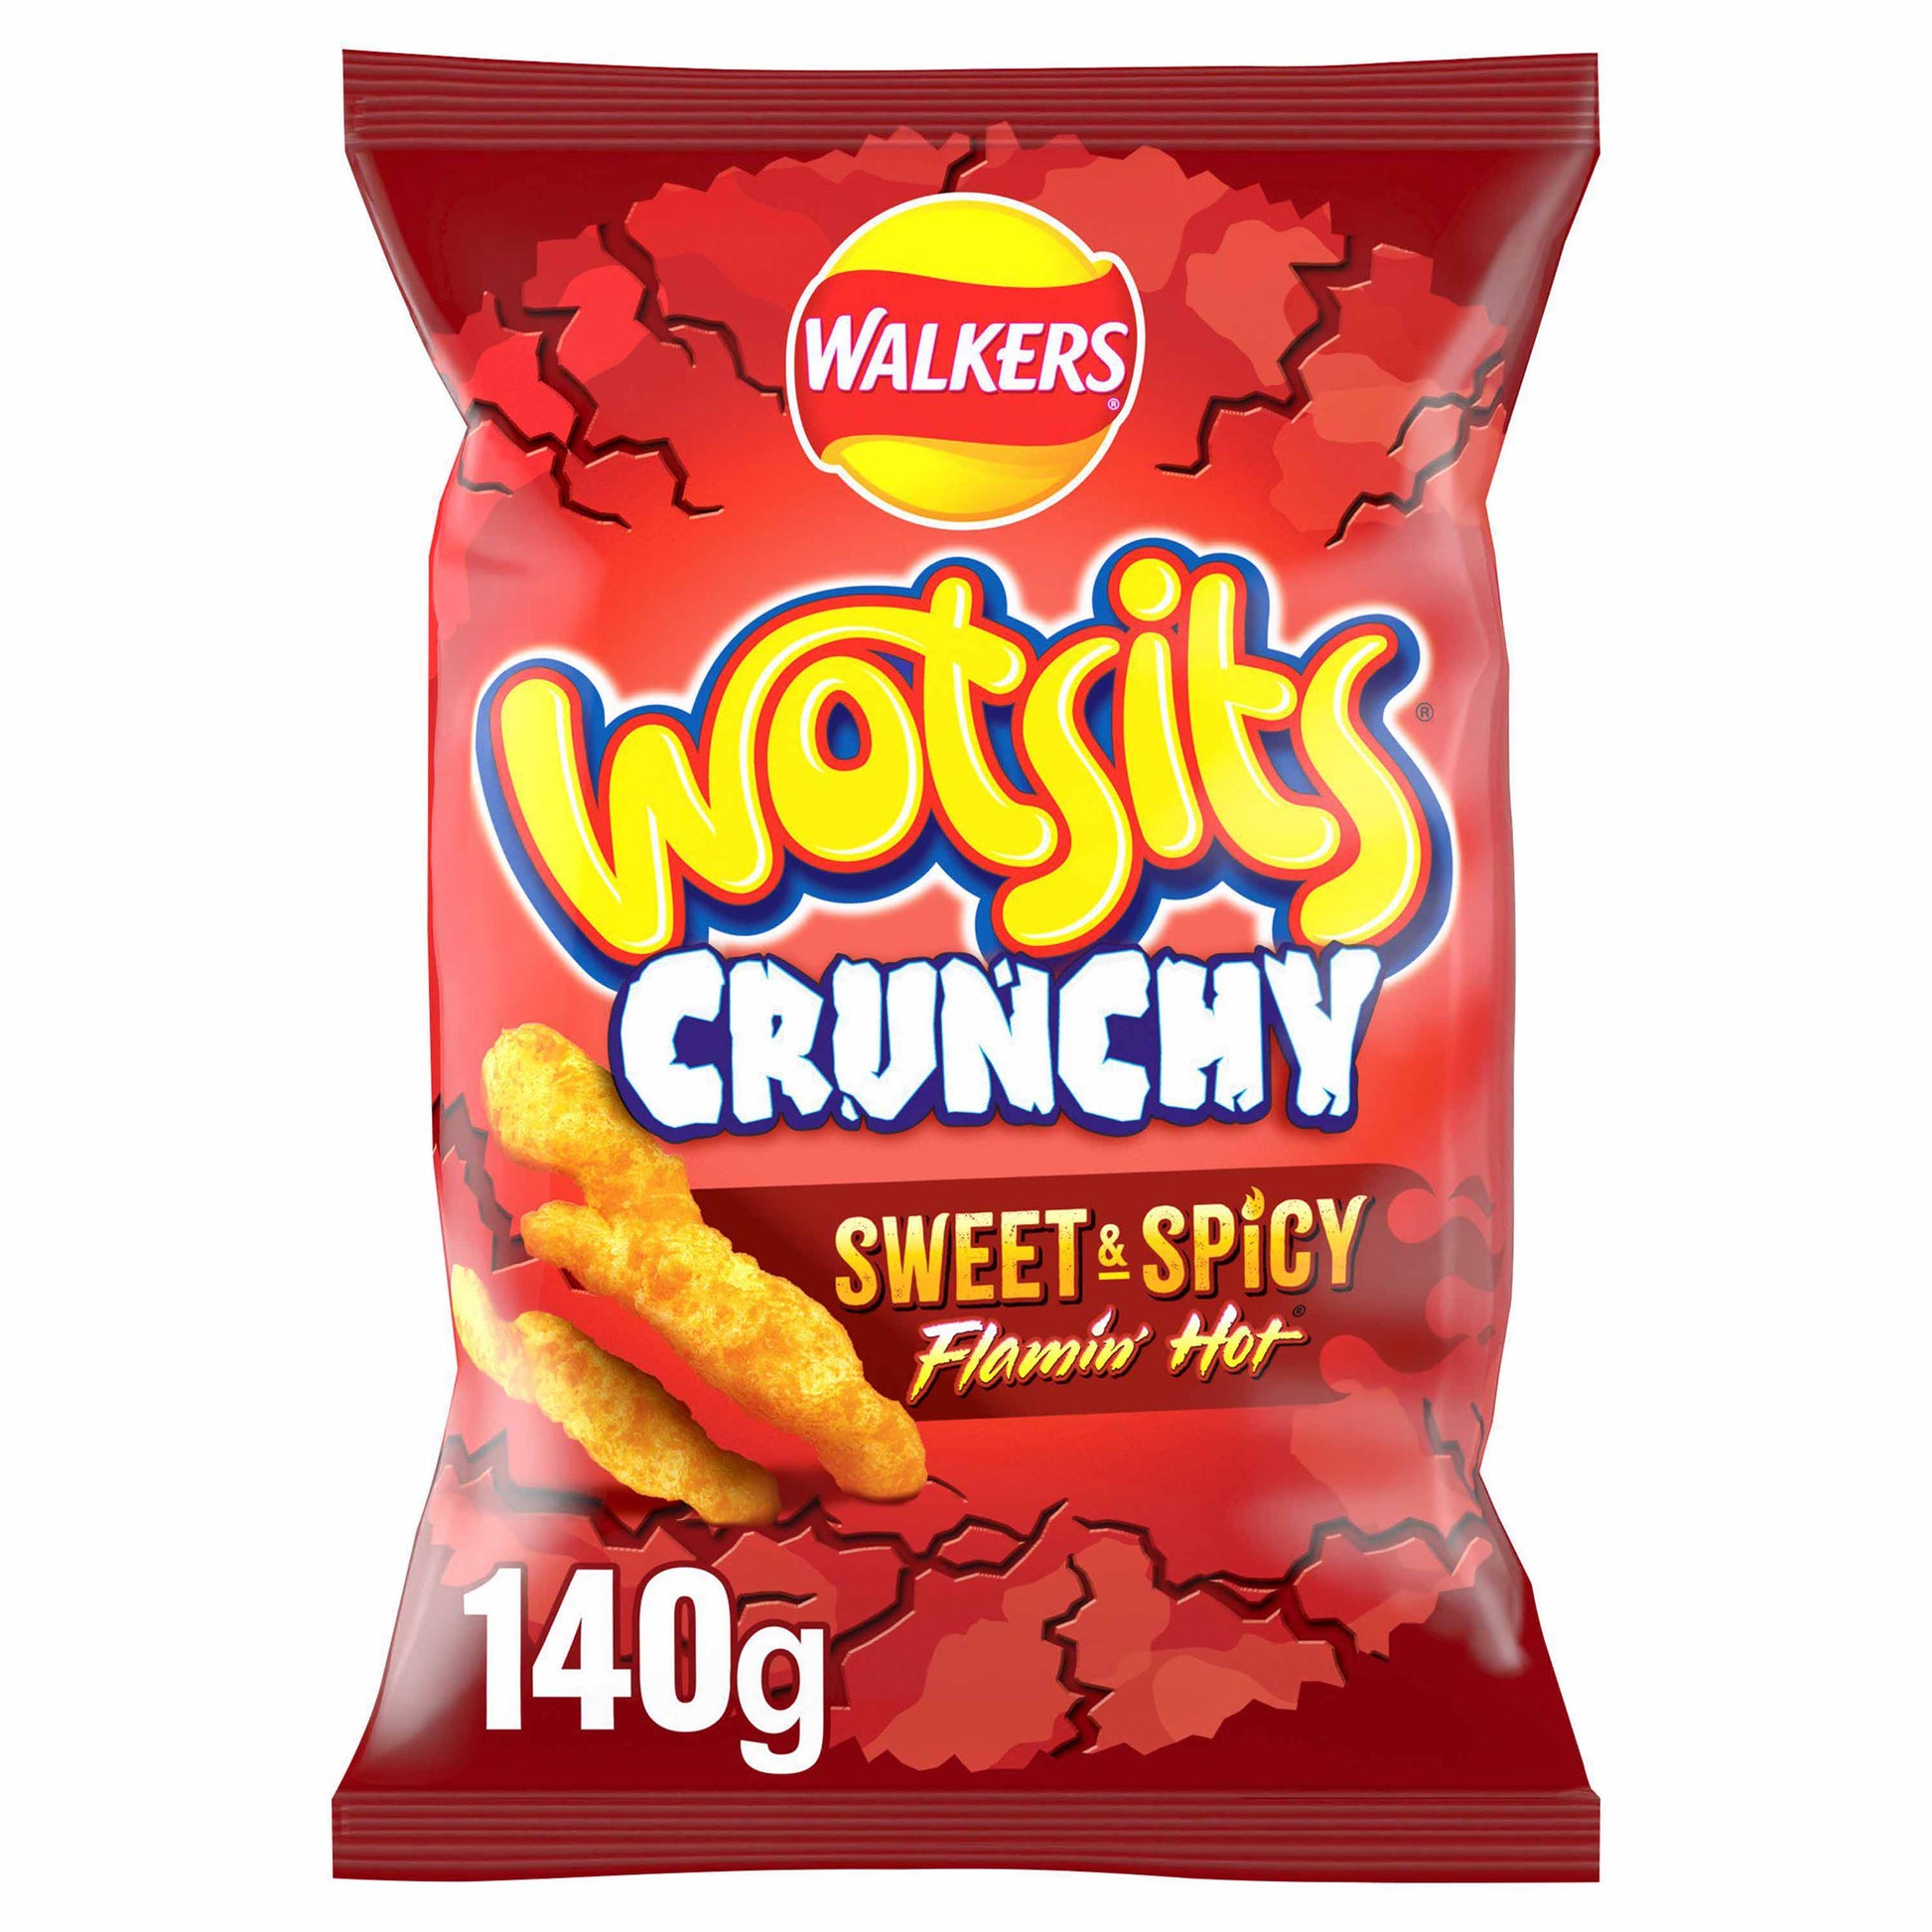 Walkers Wotsits Crunchy Flamin' Hot Crisps - 140g (Sharing Bag) - British Snacks